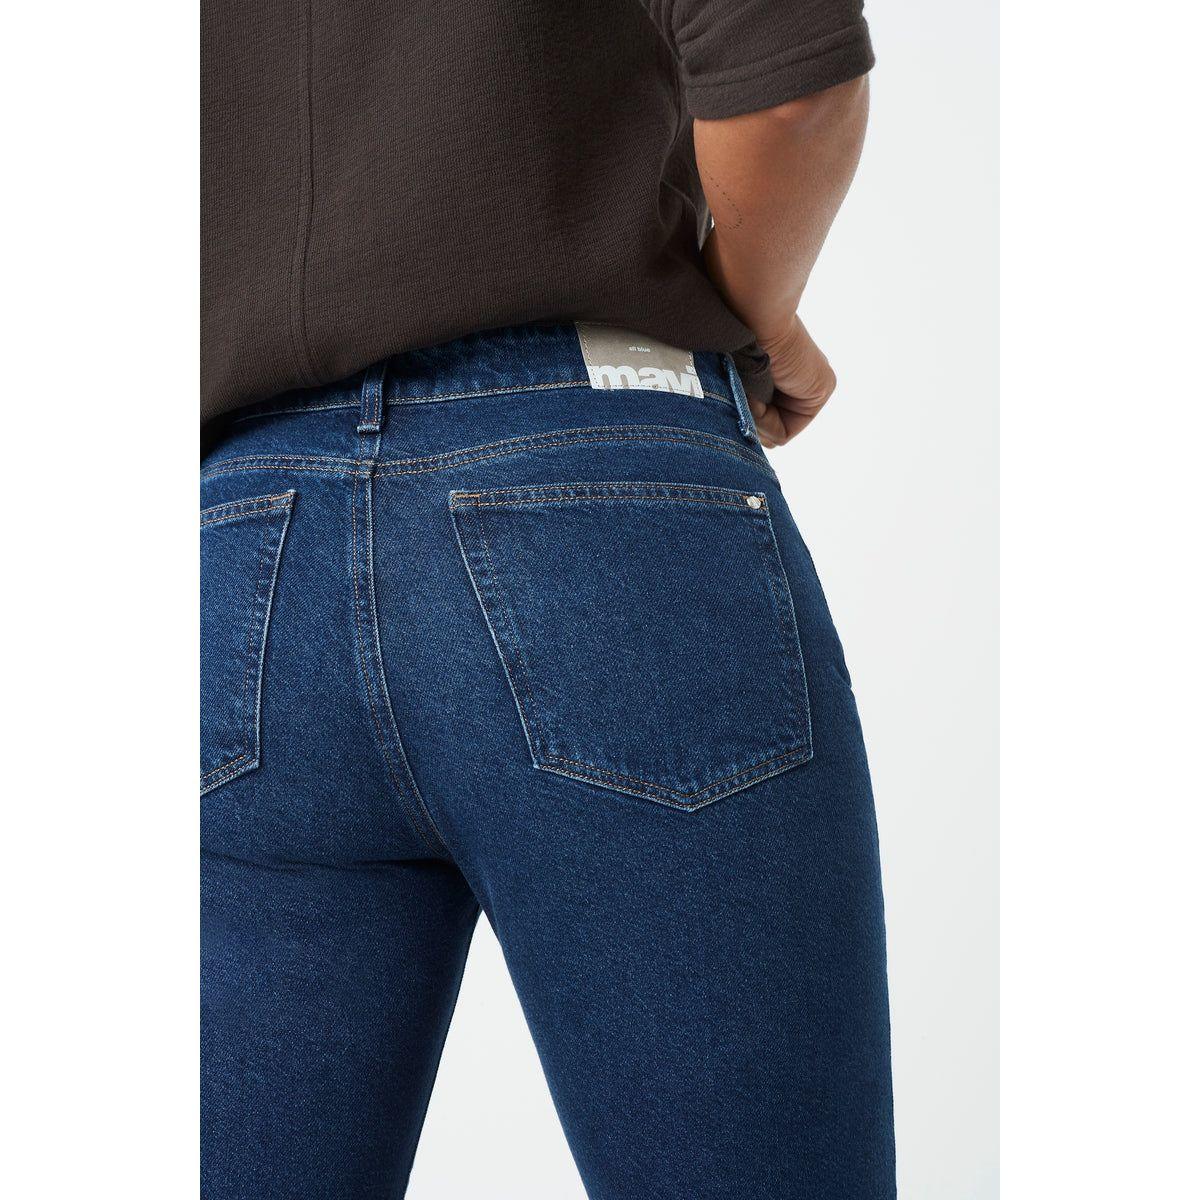 NWT - Mavi Jeans 'Viola' Organic Blue Denim Jeans -Size 27/27